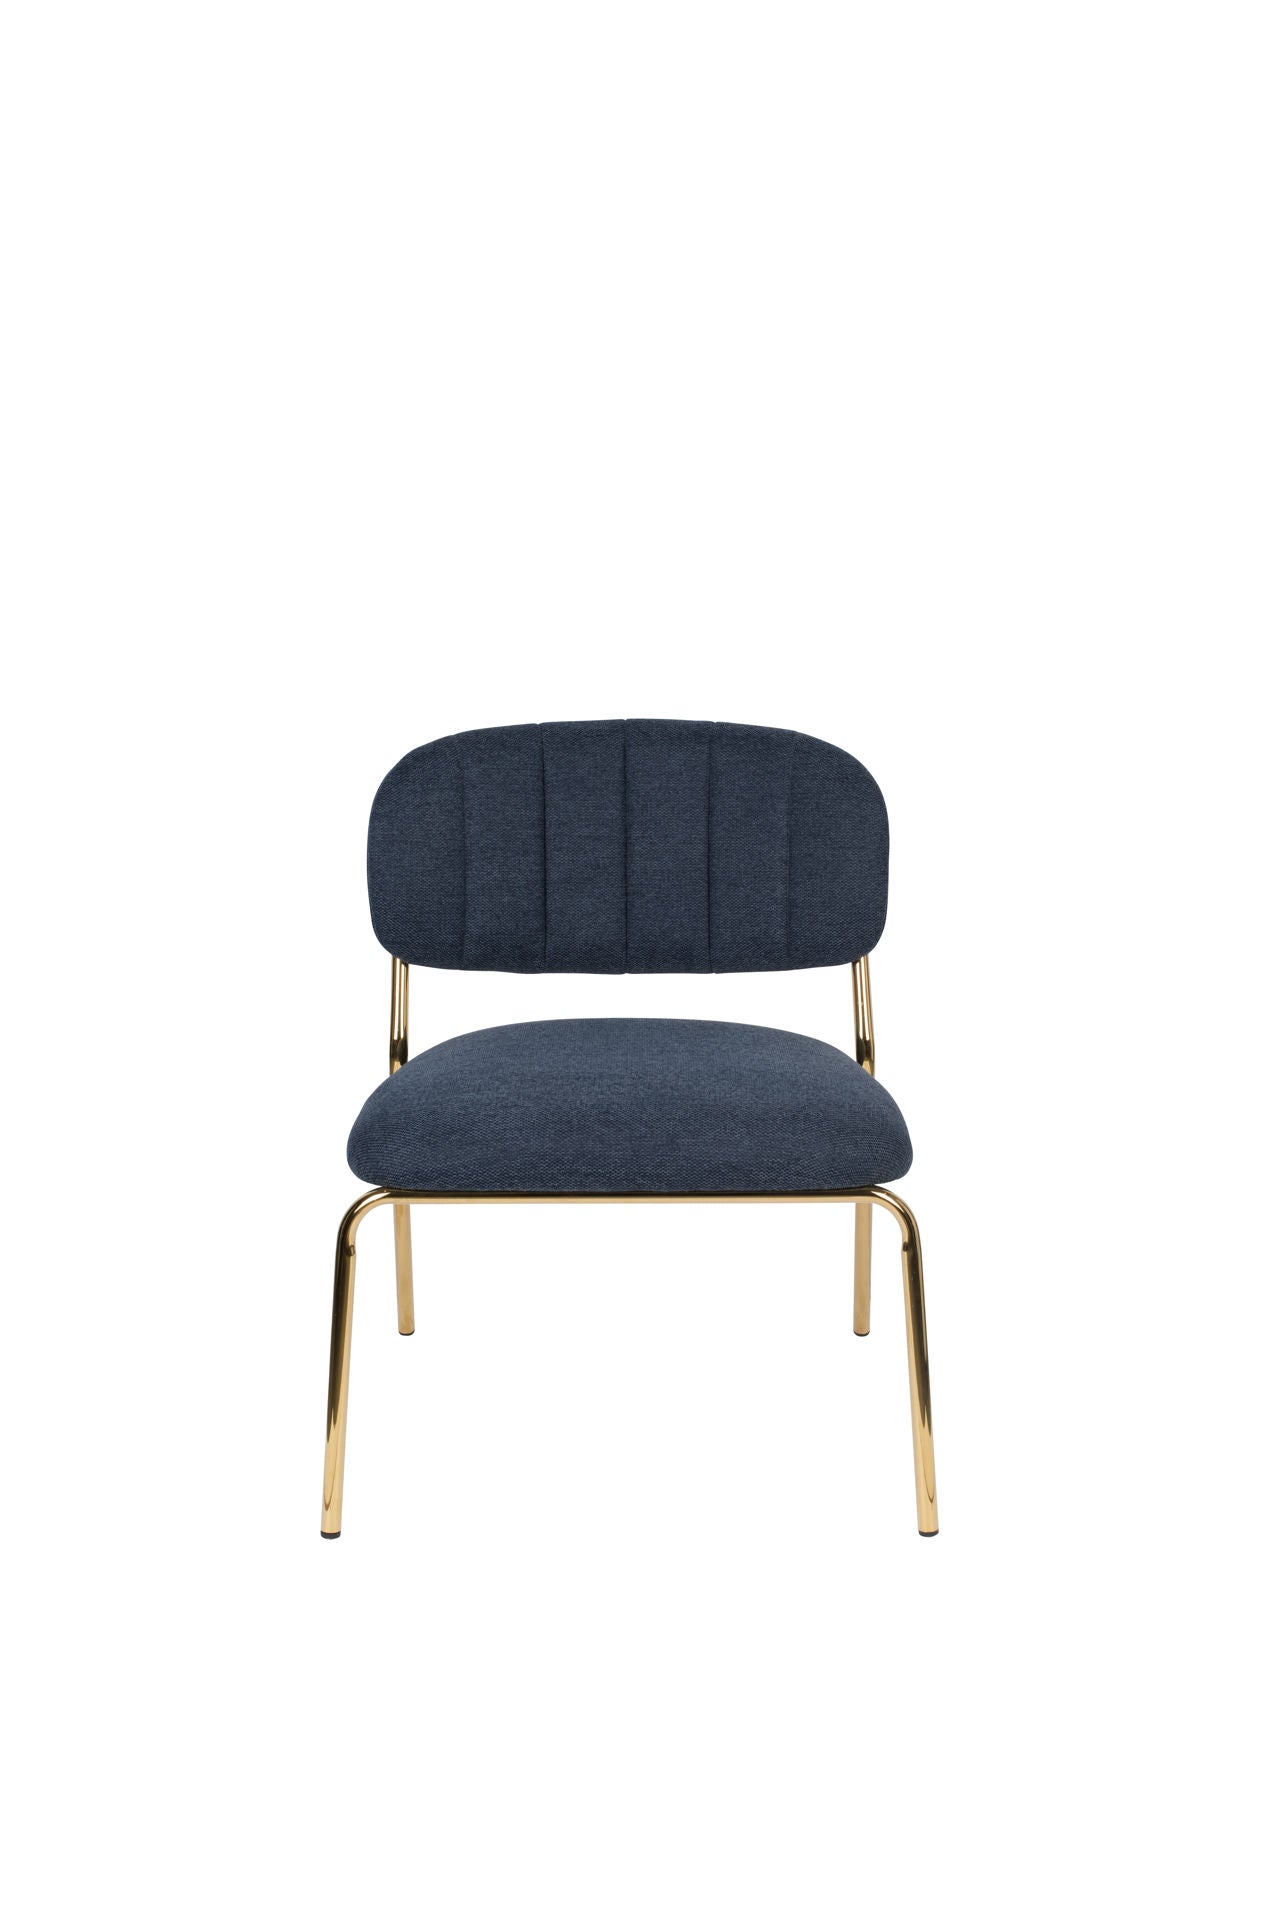 Nancy's Kalaoa Lounge Chair - Industrieel - Goud, Donkerblauw - Polyester, Multiplex, Staal - 60 cm x 56 cm x 68 cm